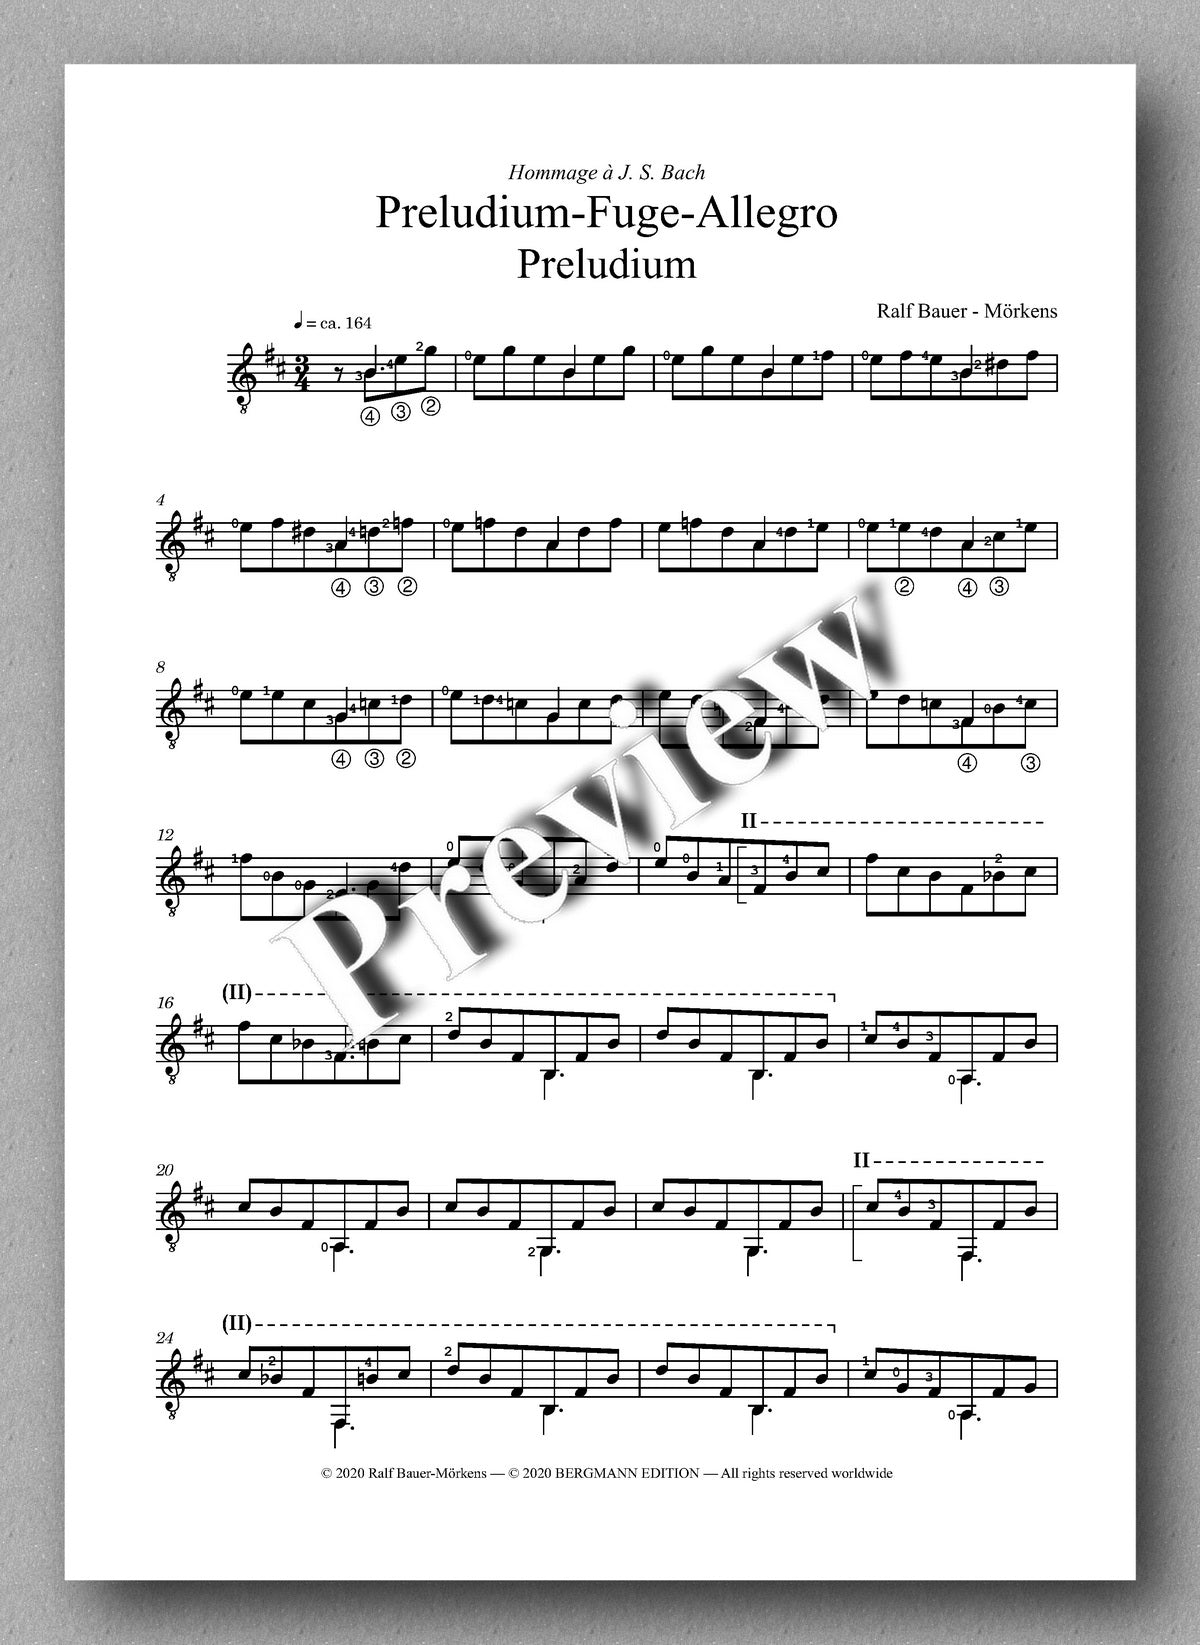 Preludium-Fuge-Allegro by Ralf Bauer-Mörkens - preview of the Preludium